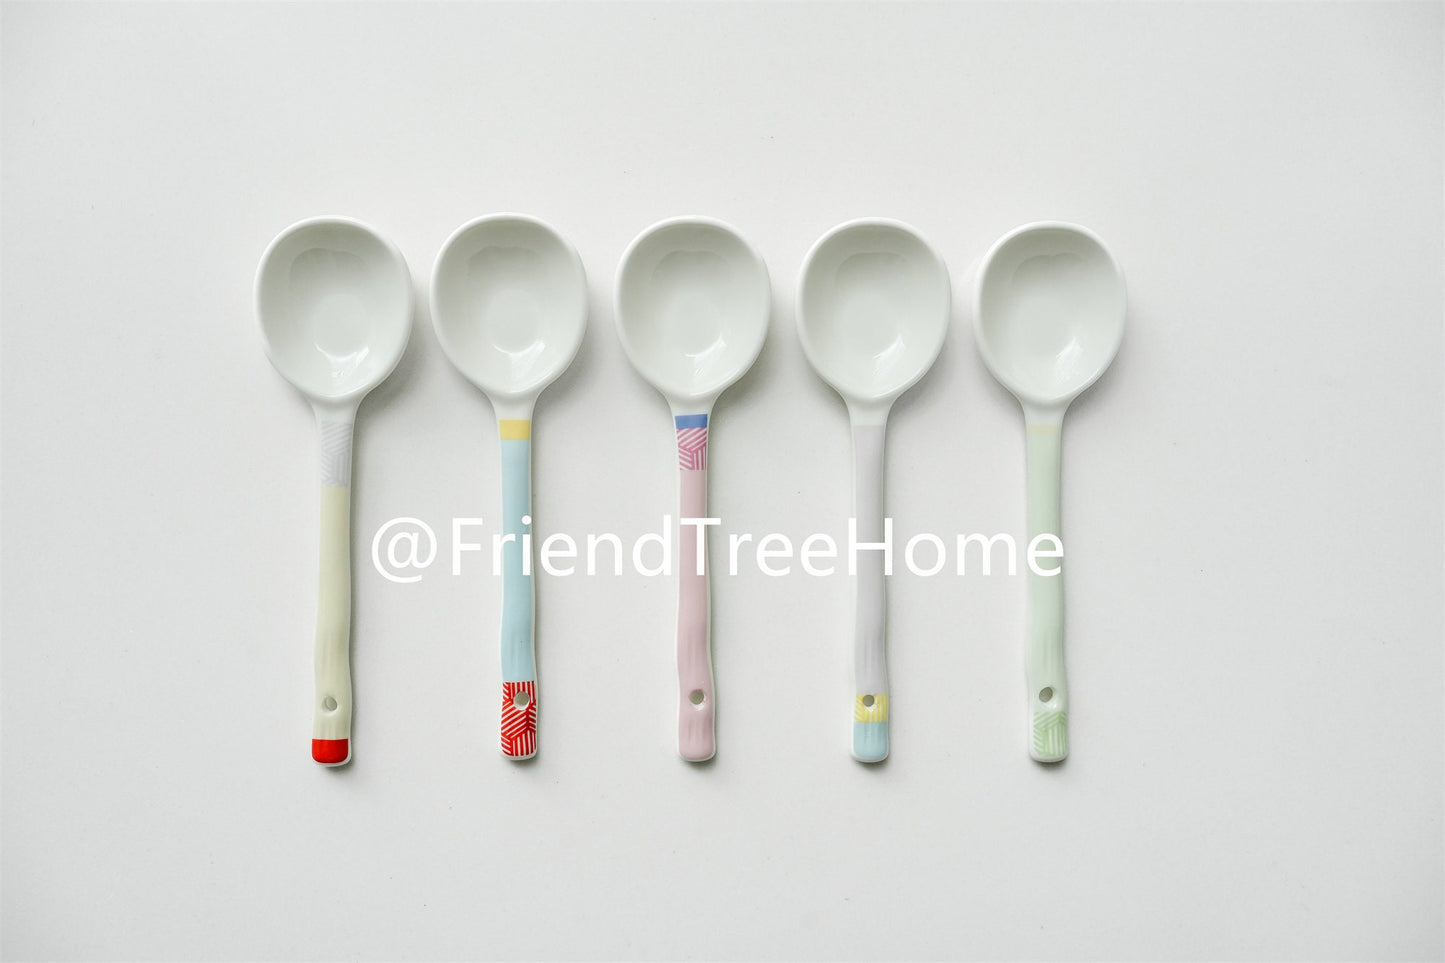 5 PCs ceramic spoons set